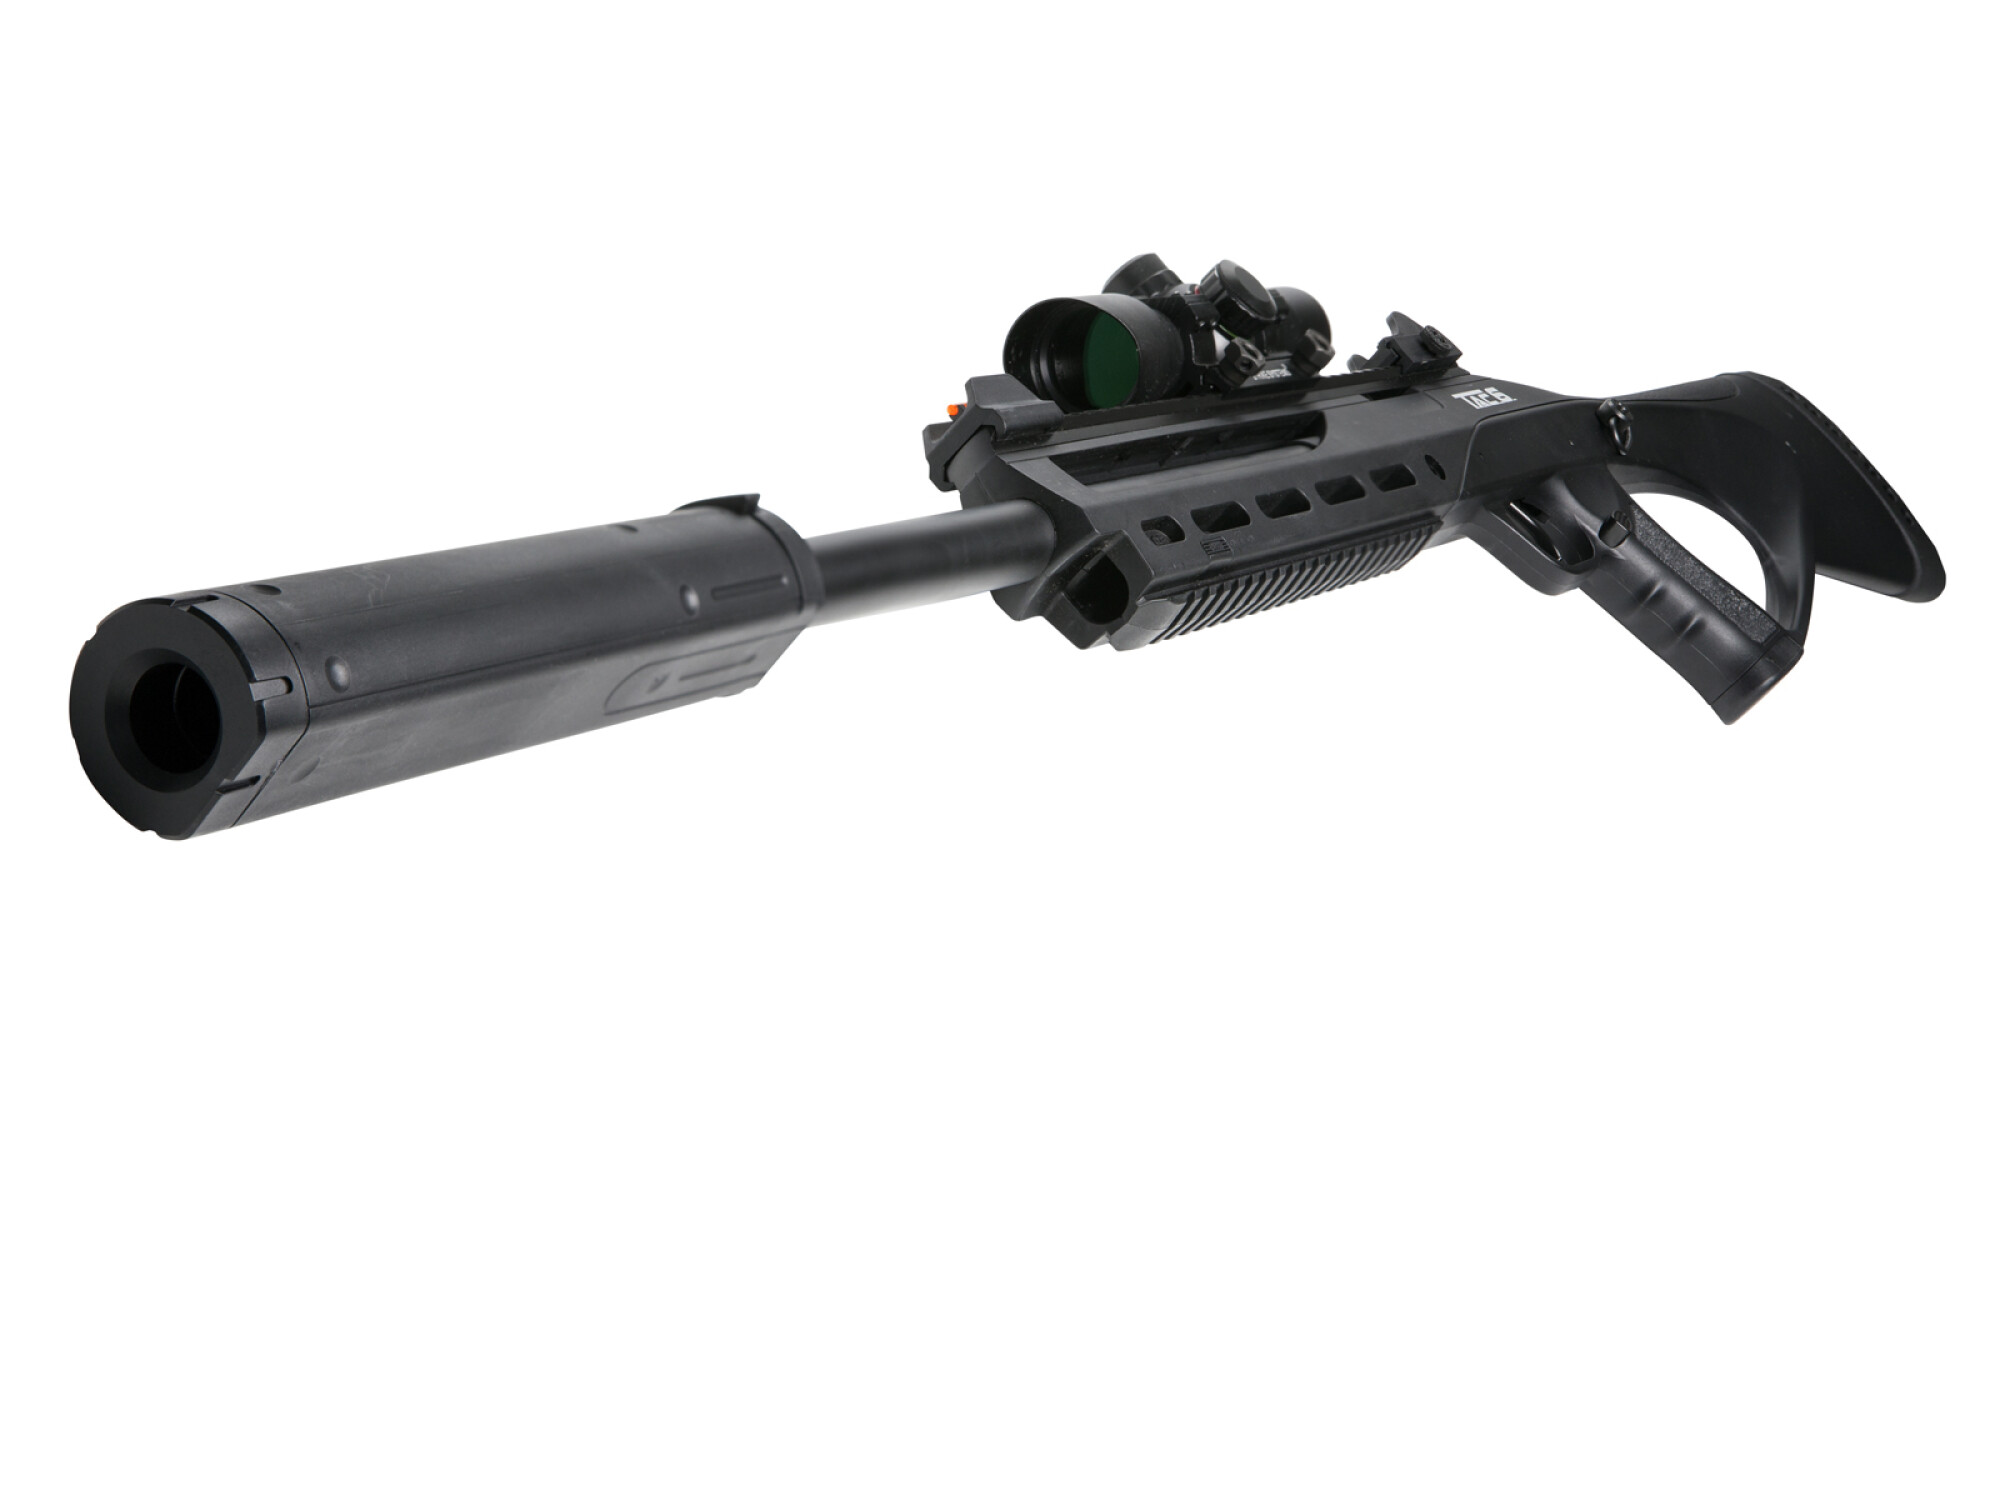 Pistola ISSC M22 4.5mm con Blowback - CO2 — Aventureros